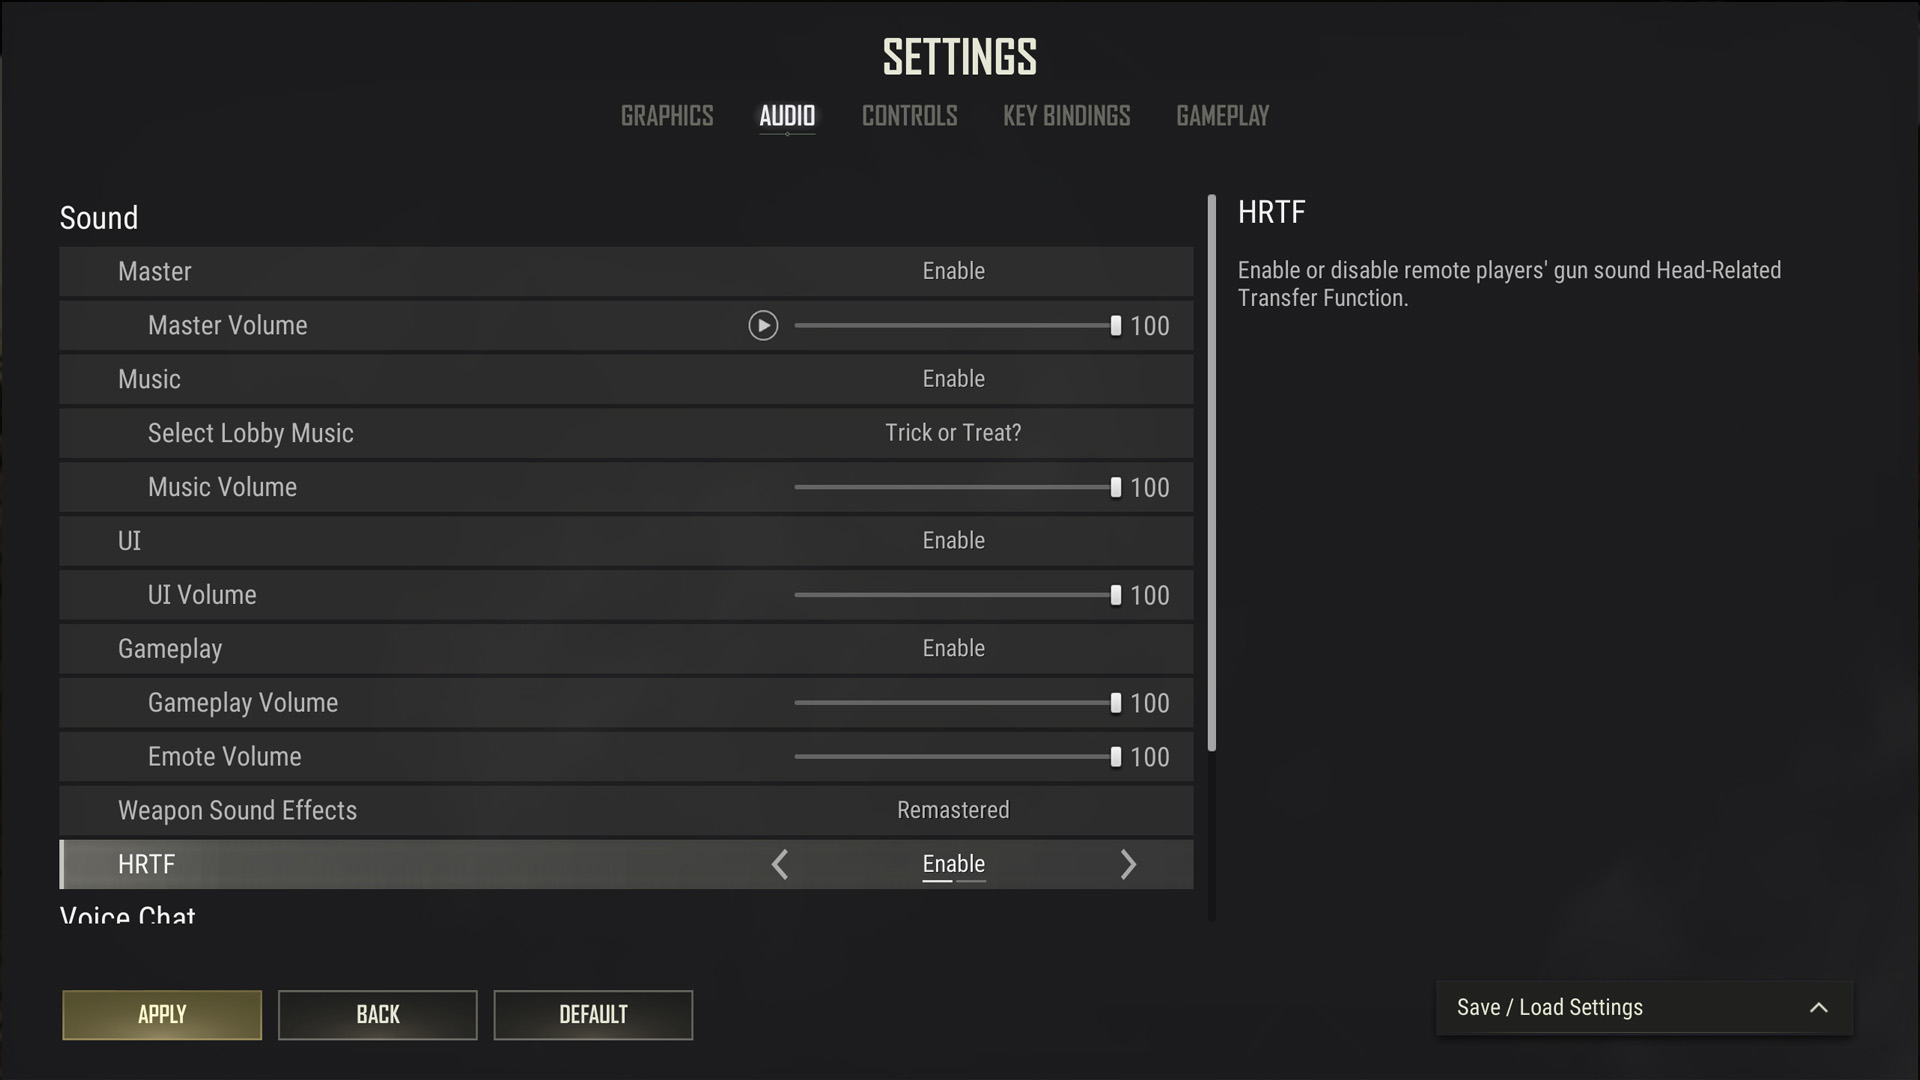 Playerunknown's battlegrounds best PUBG settings: the audio menu in the PUBG settings